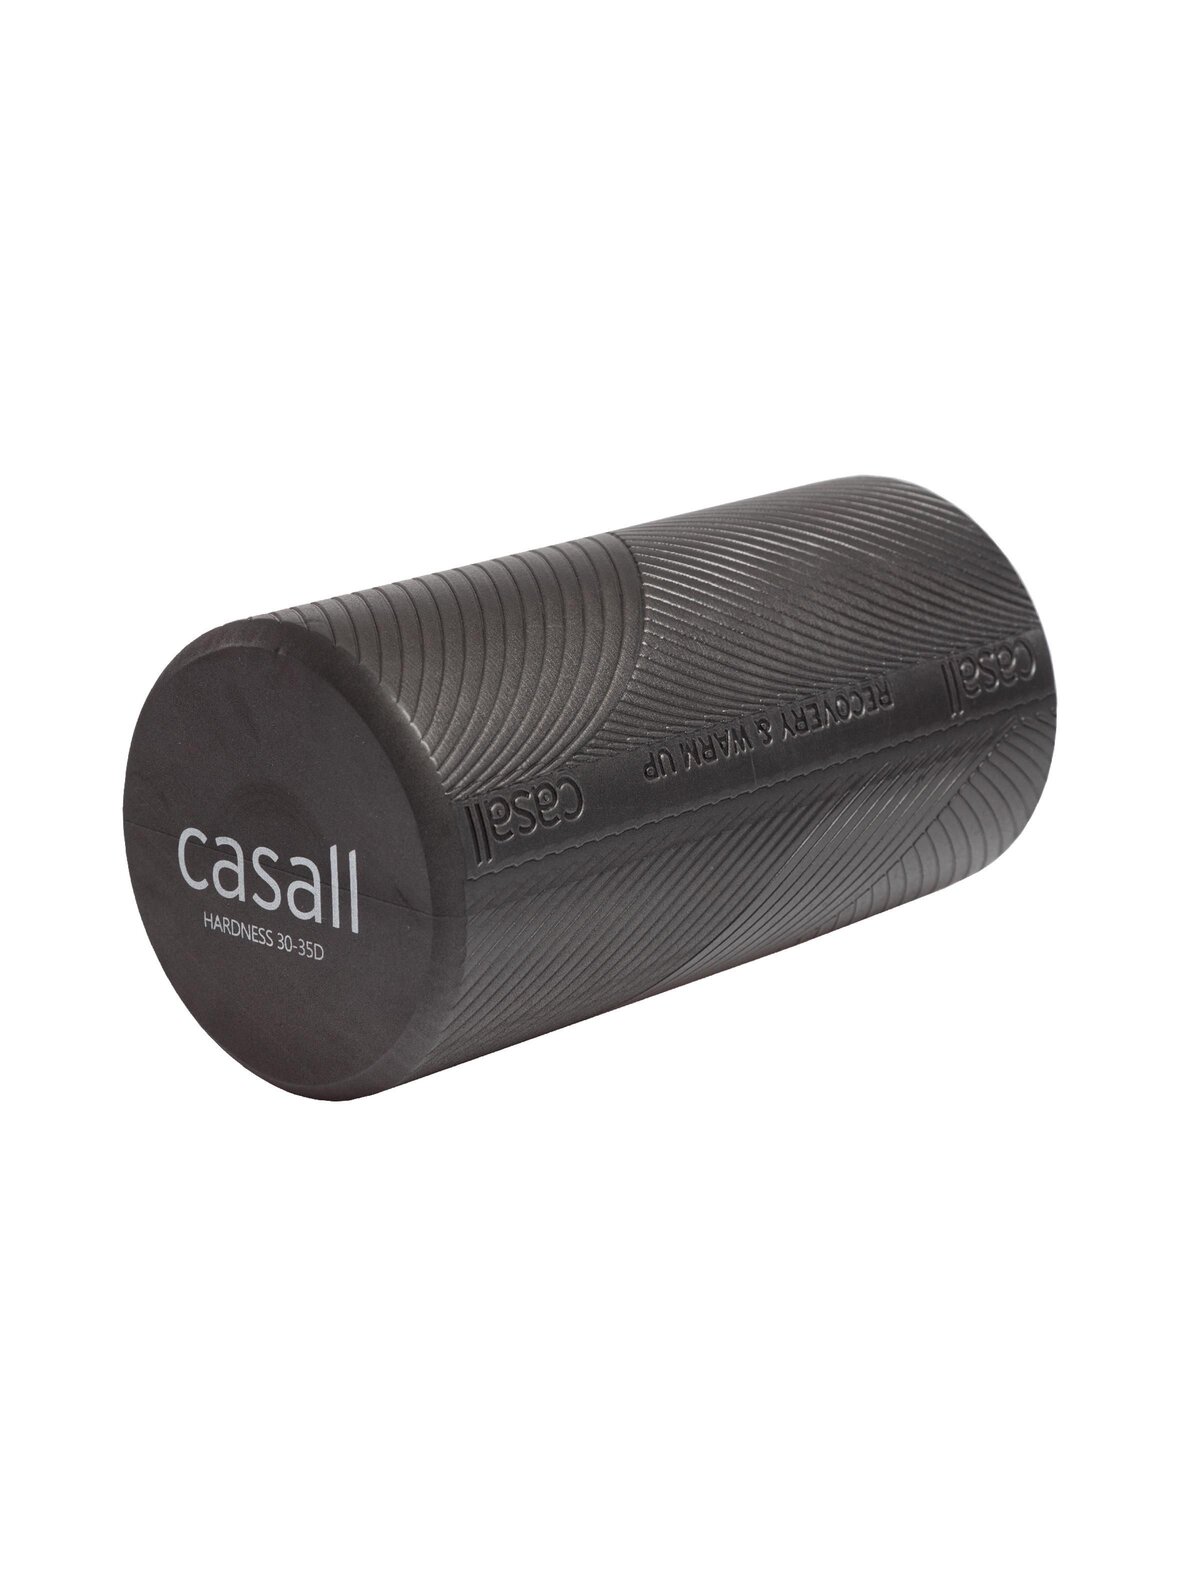 Casall Foam roll small -hierontarulla, 31 x 15 cm